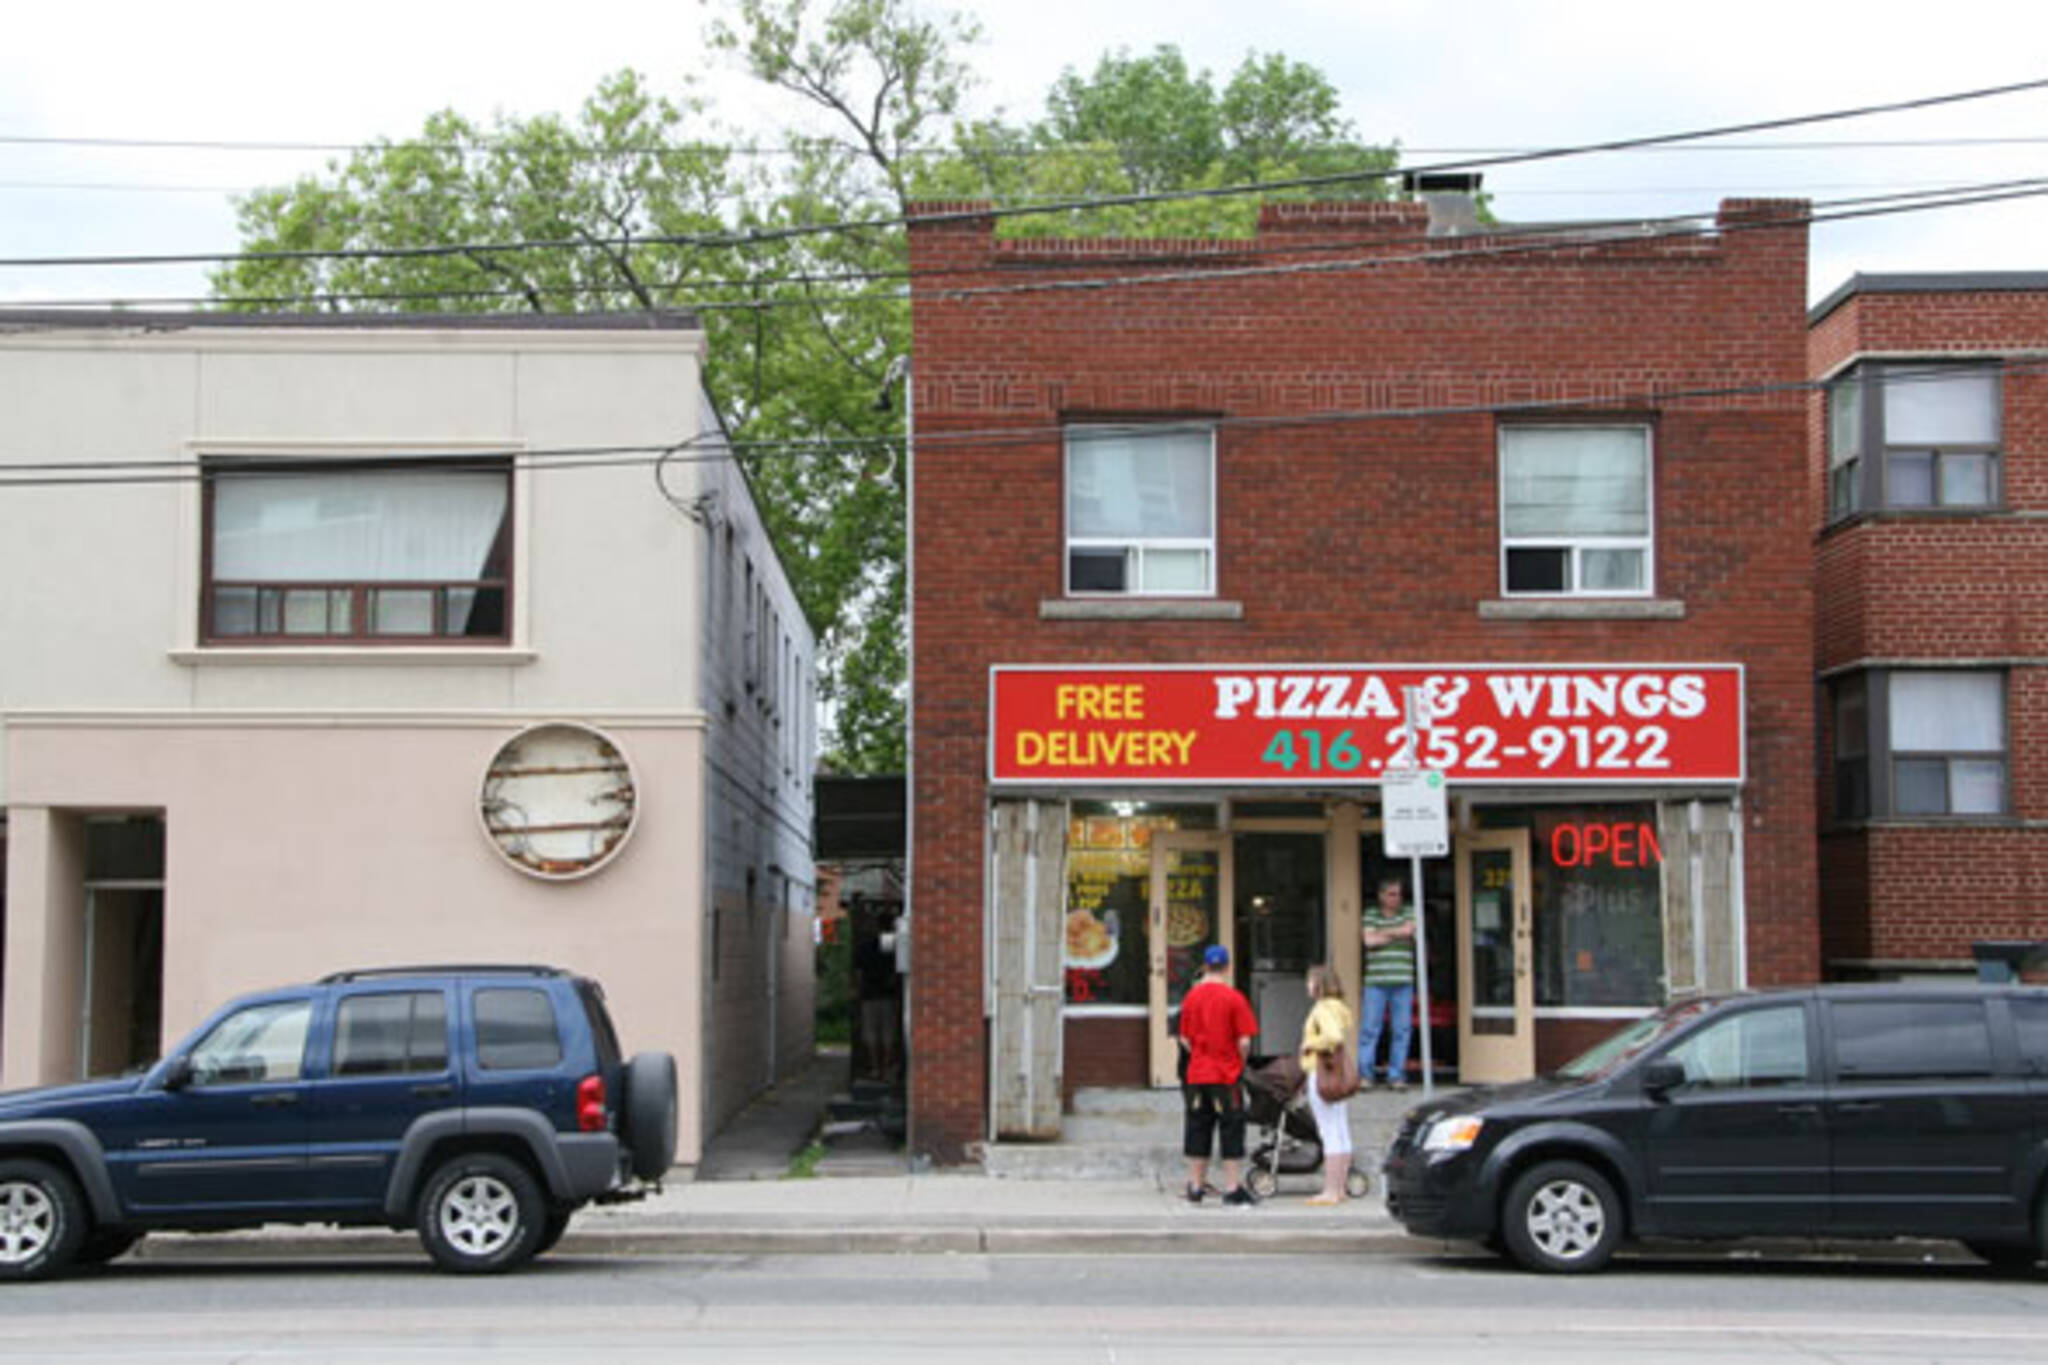 Pizza & Wings - CLOSED - blogTO - Toronto